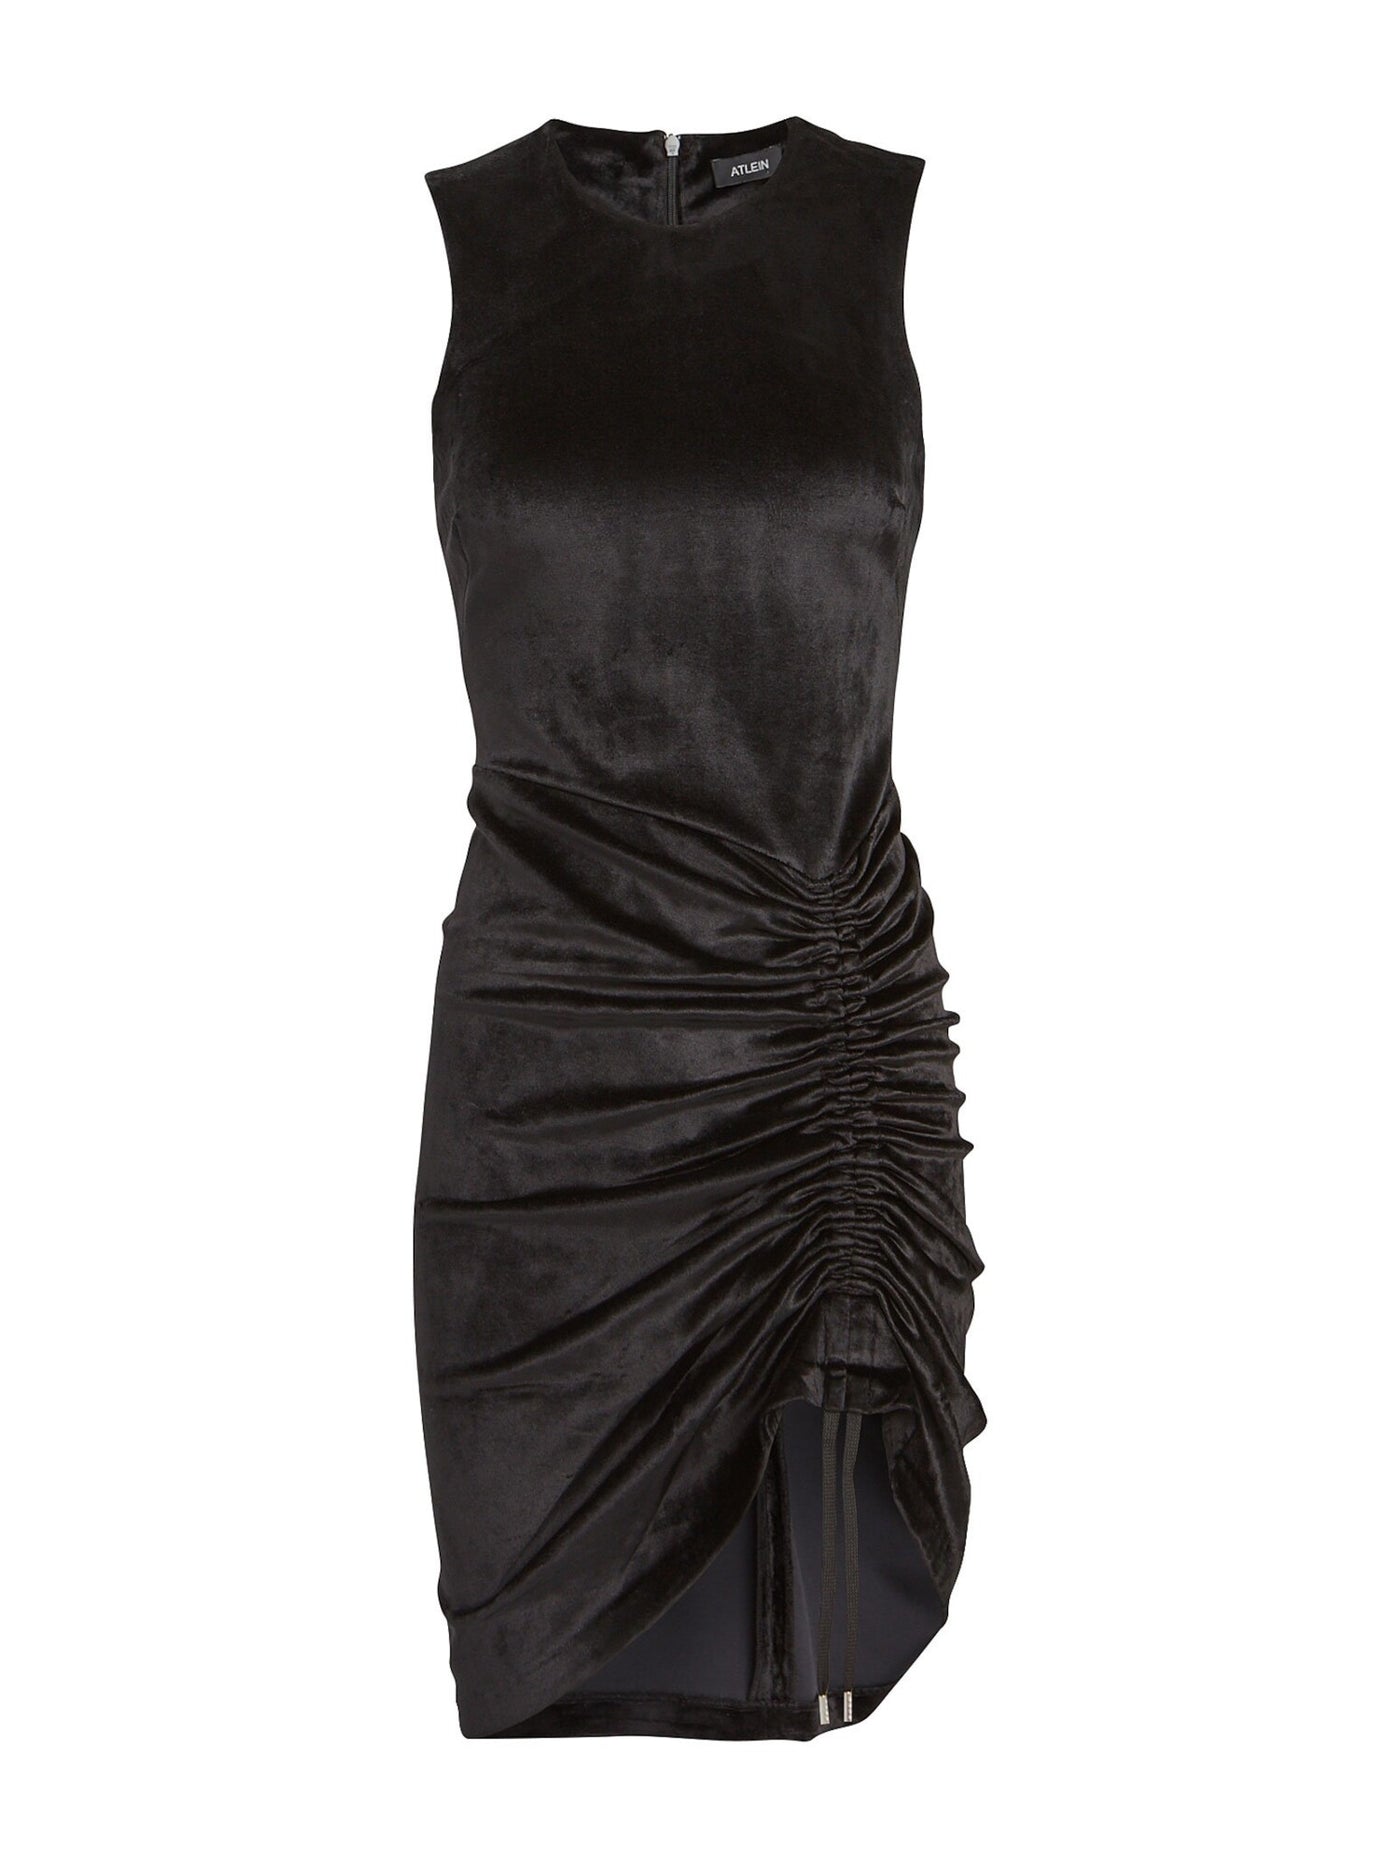 Atlein Womens Black Zippered Velvet Sleeveless Jewel Neck Short Cocktail Body Con Dress 34 Waist